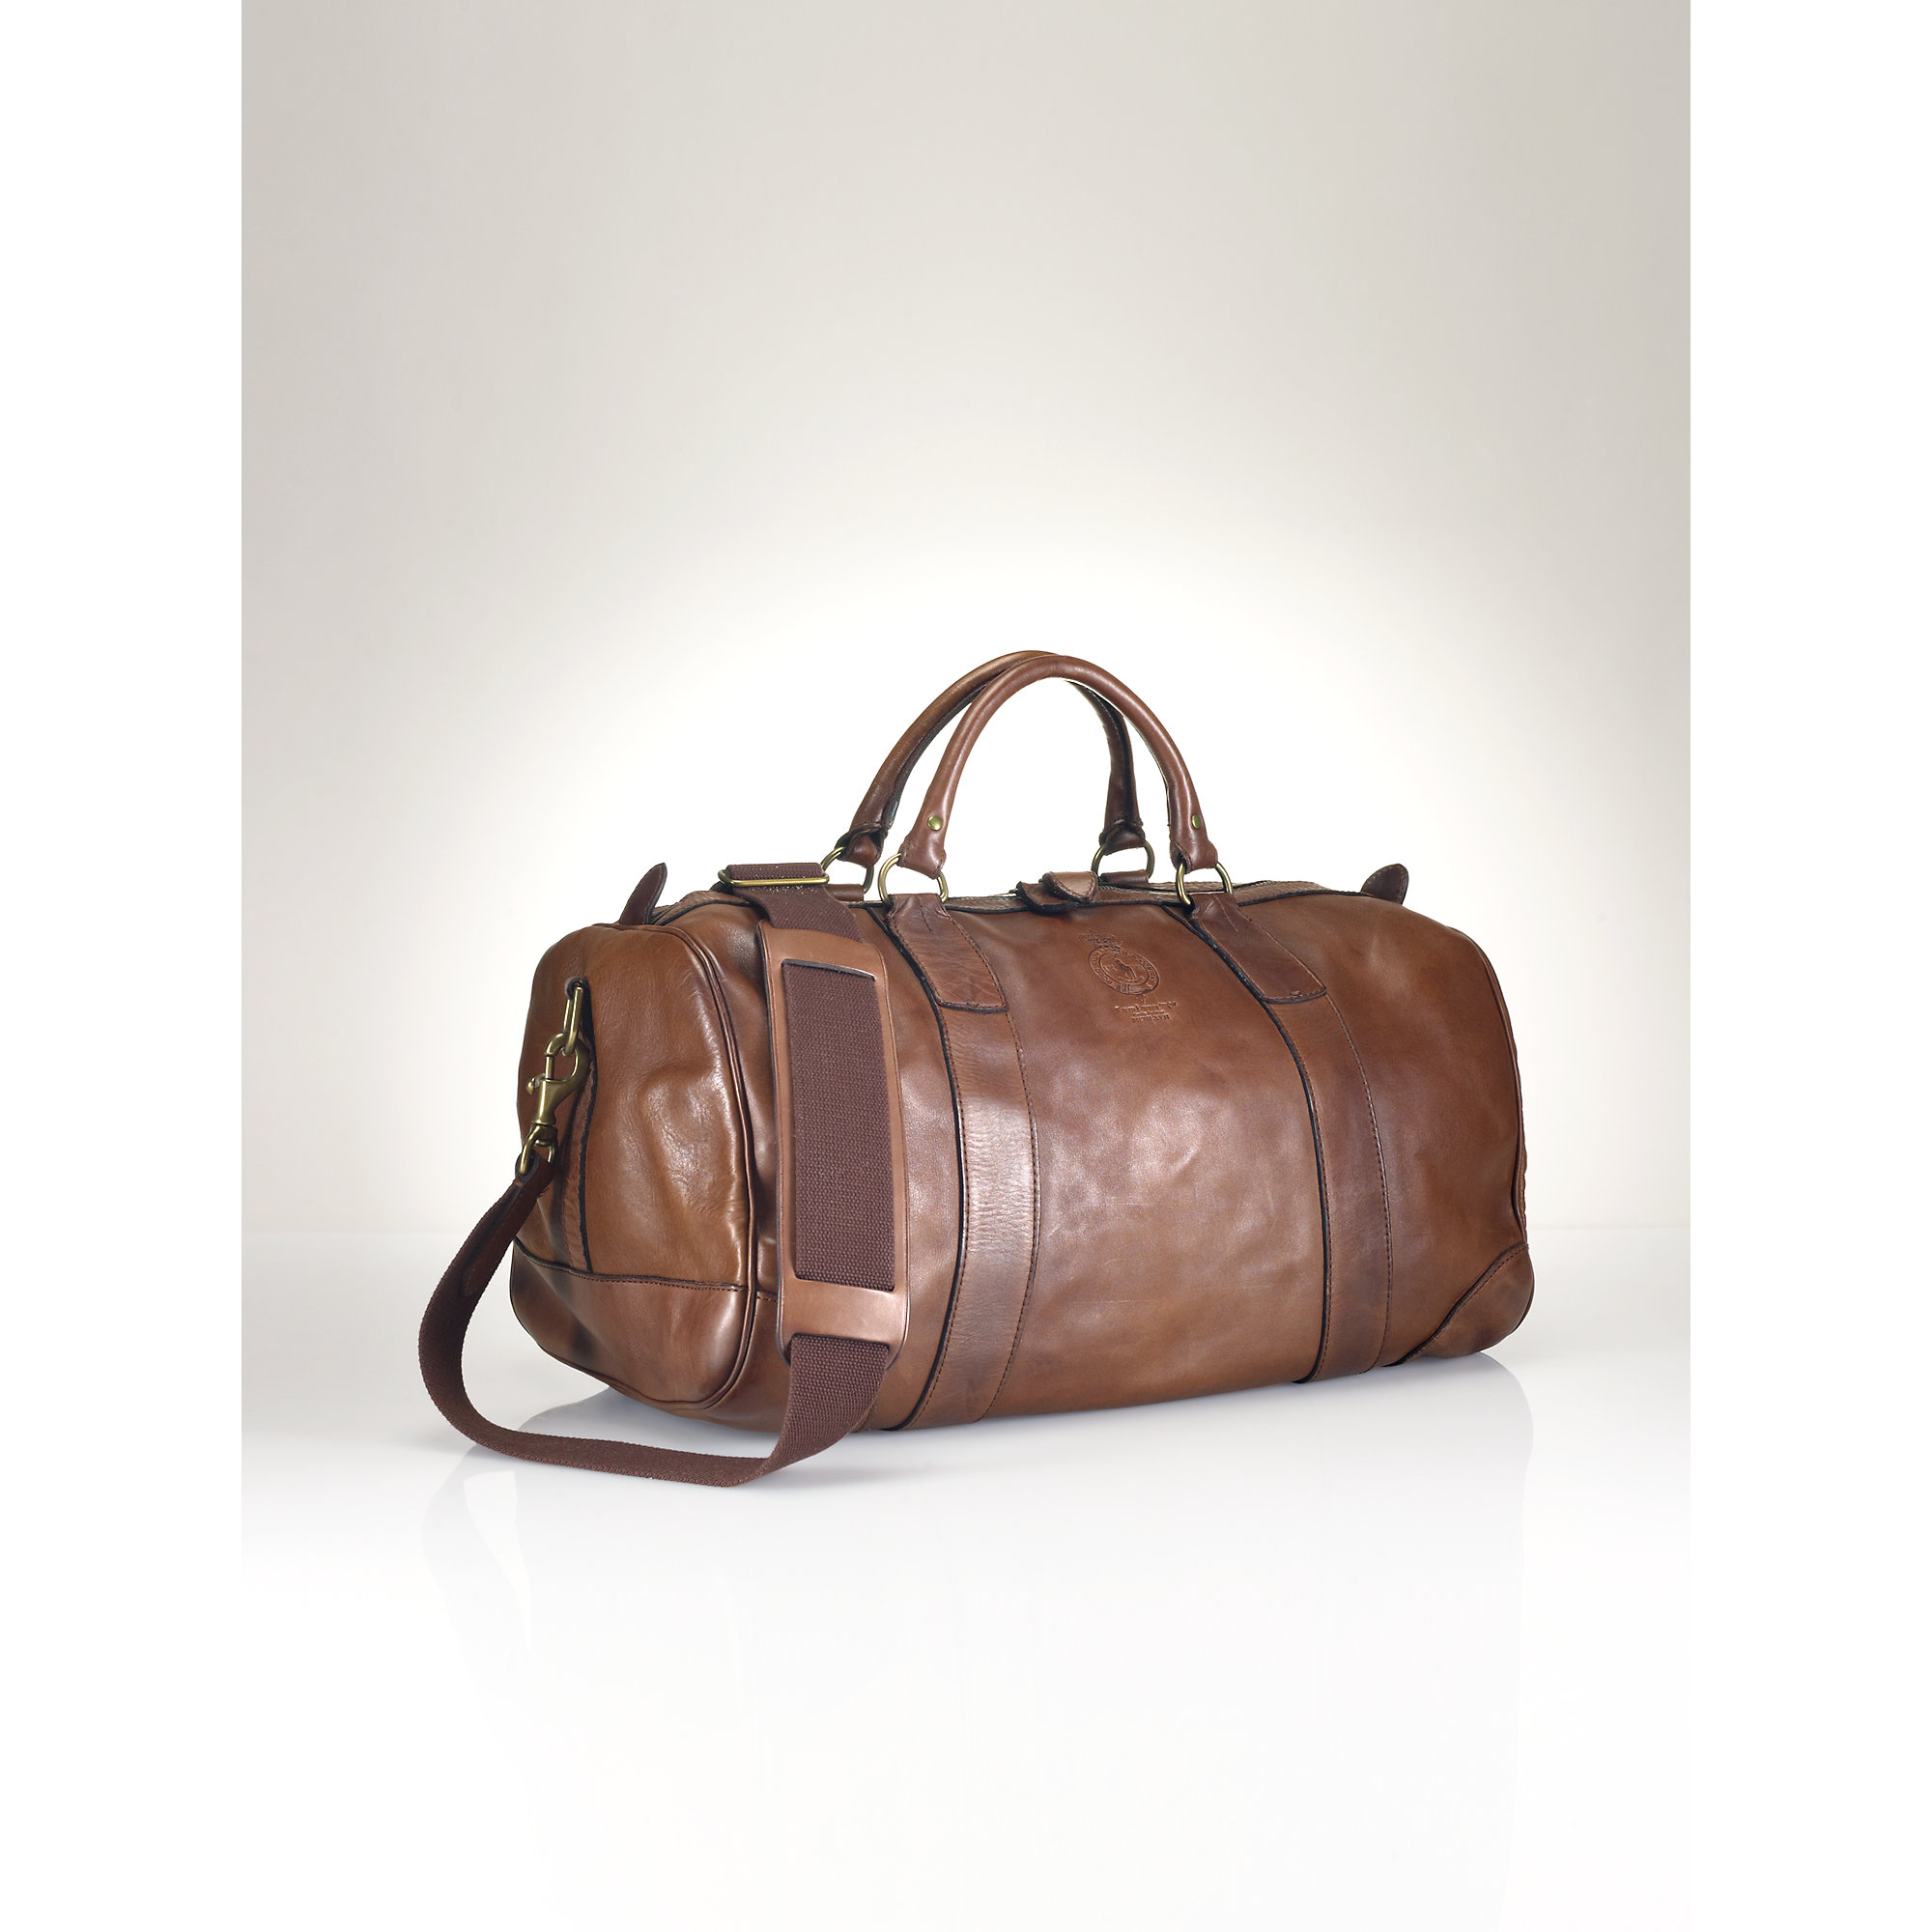 Polo Ralph Lauren Leather Duffel Bag in Brown for Men - Lyst